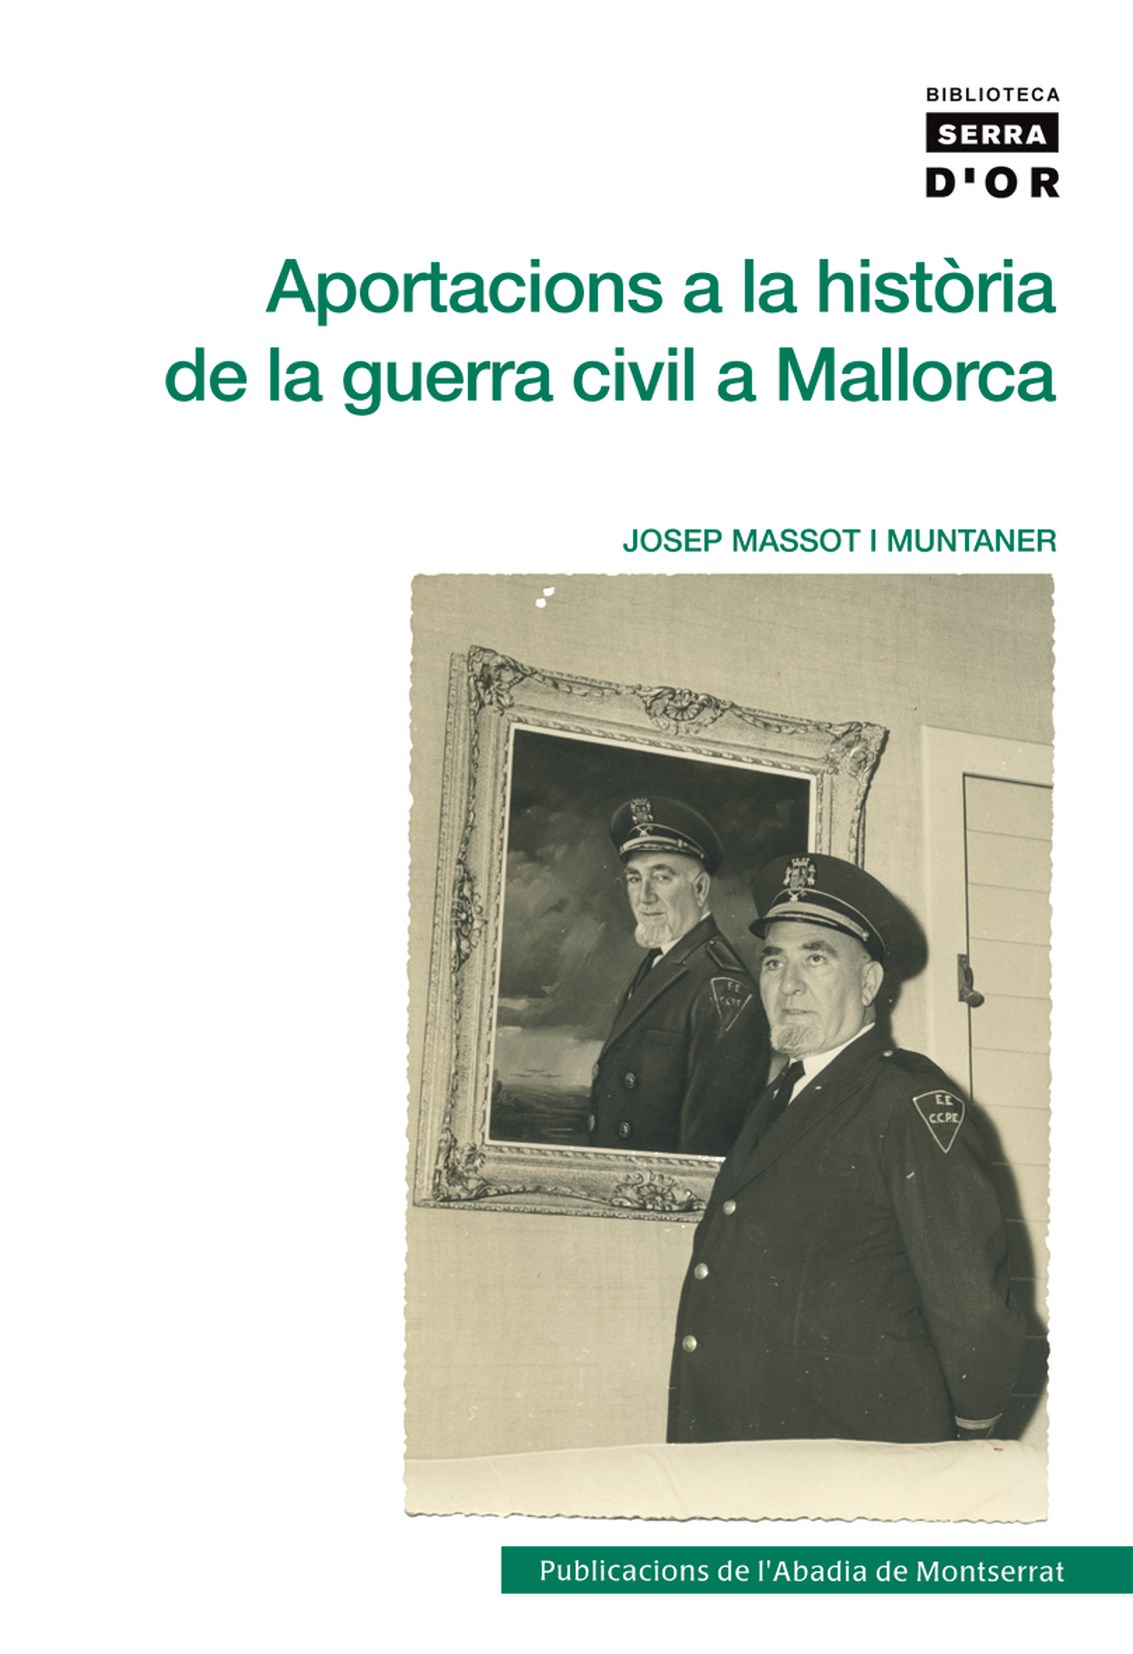 Josep Massot i Muntaner